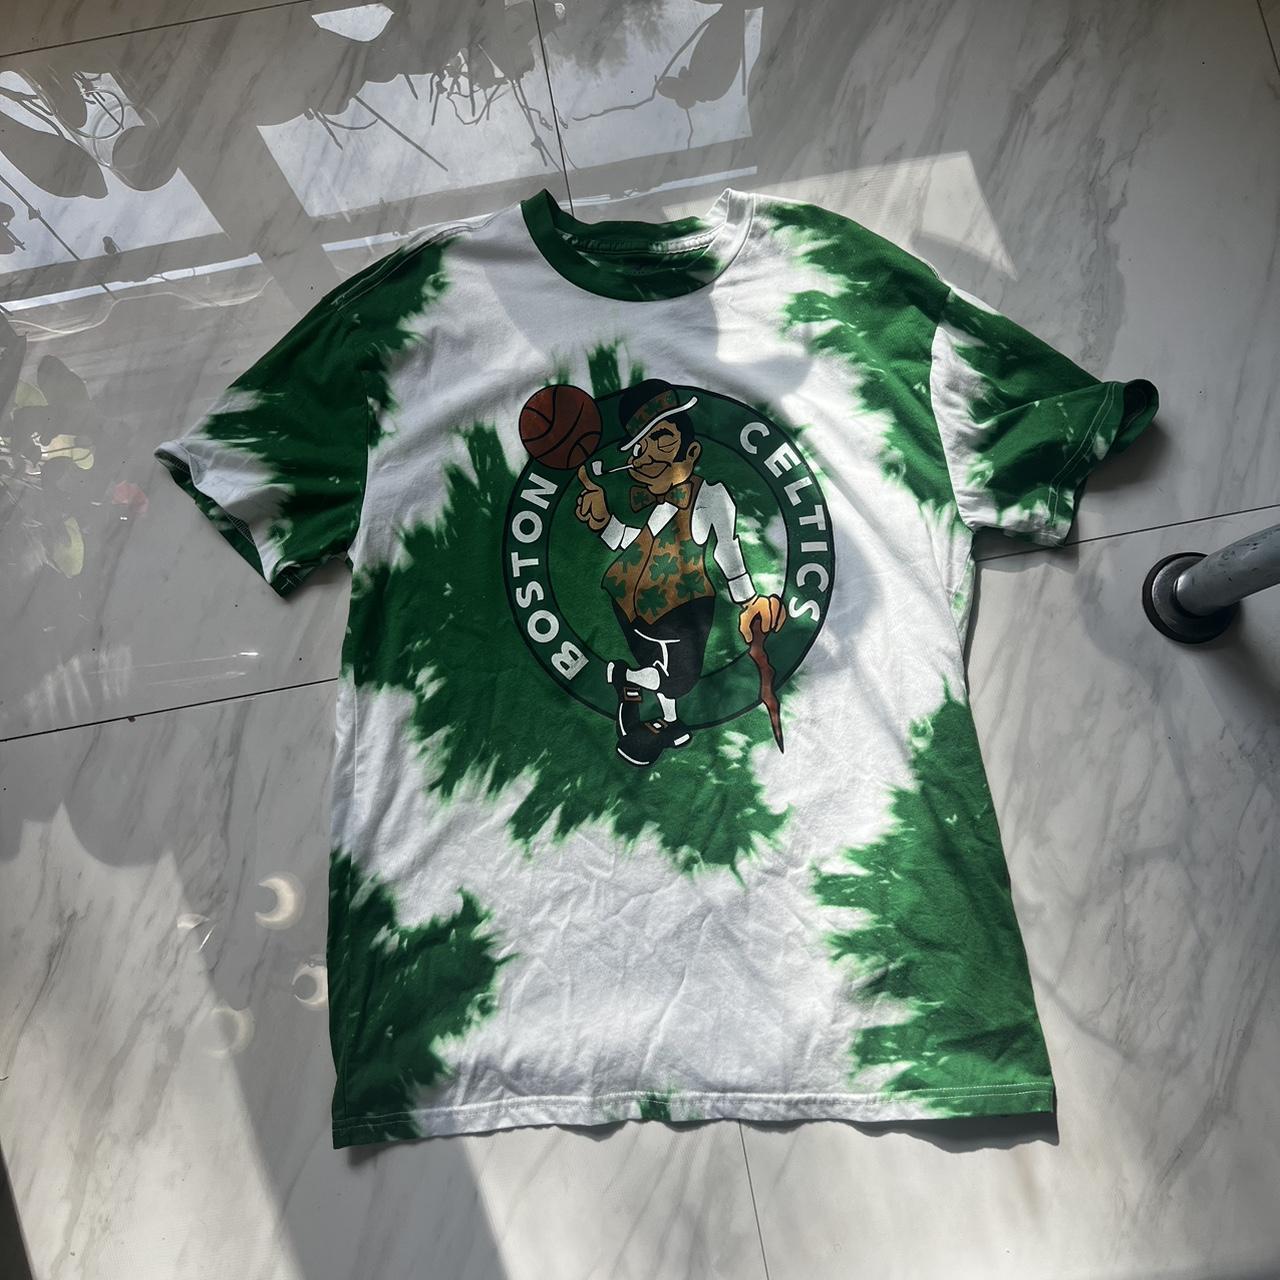 Hollister, Tops, Nba Boston Celtics Tye Dye Tshirt New